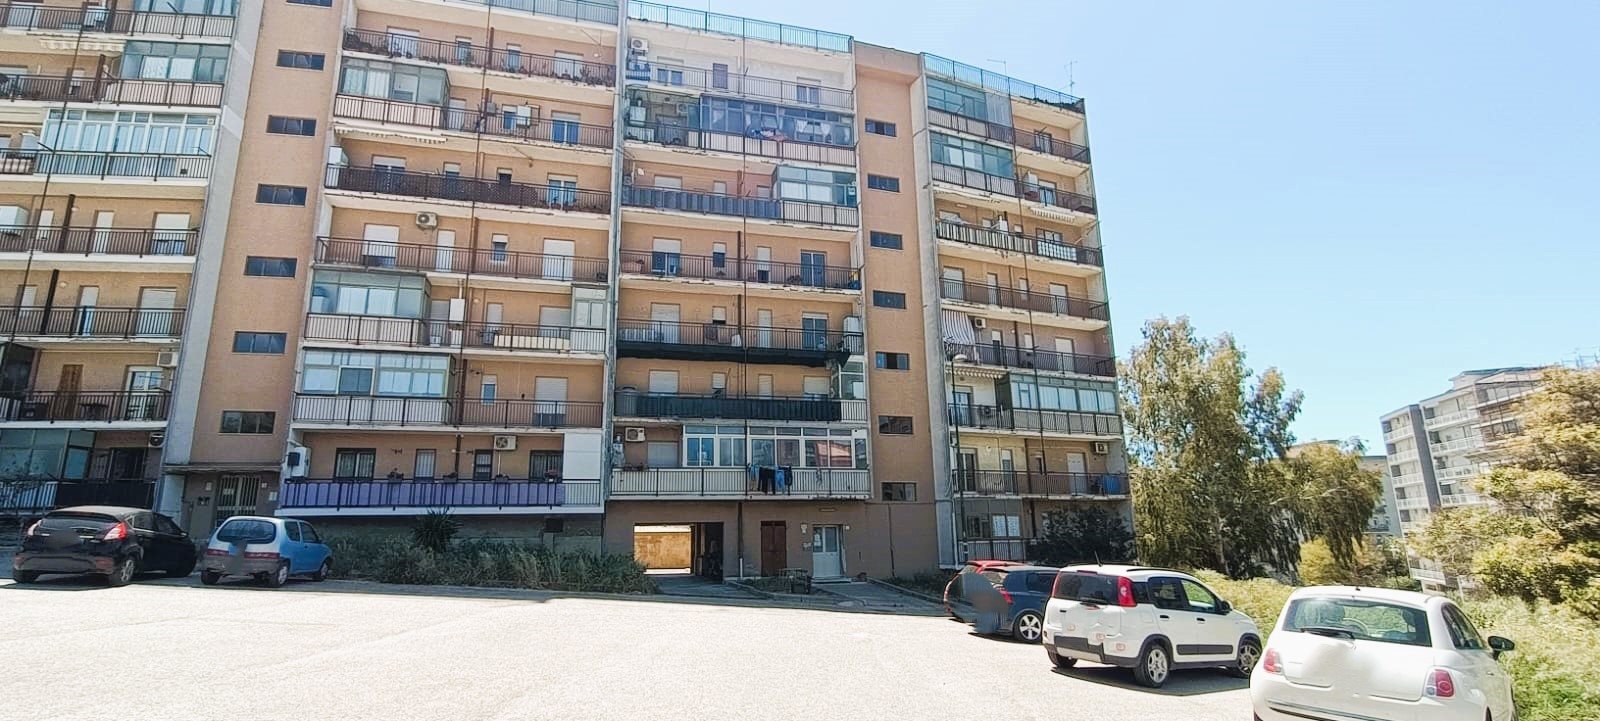 Appartamento in Piazza Amagione, 1, Agrigento (AG)